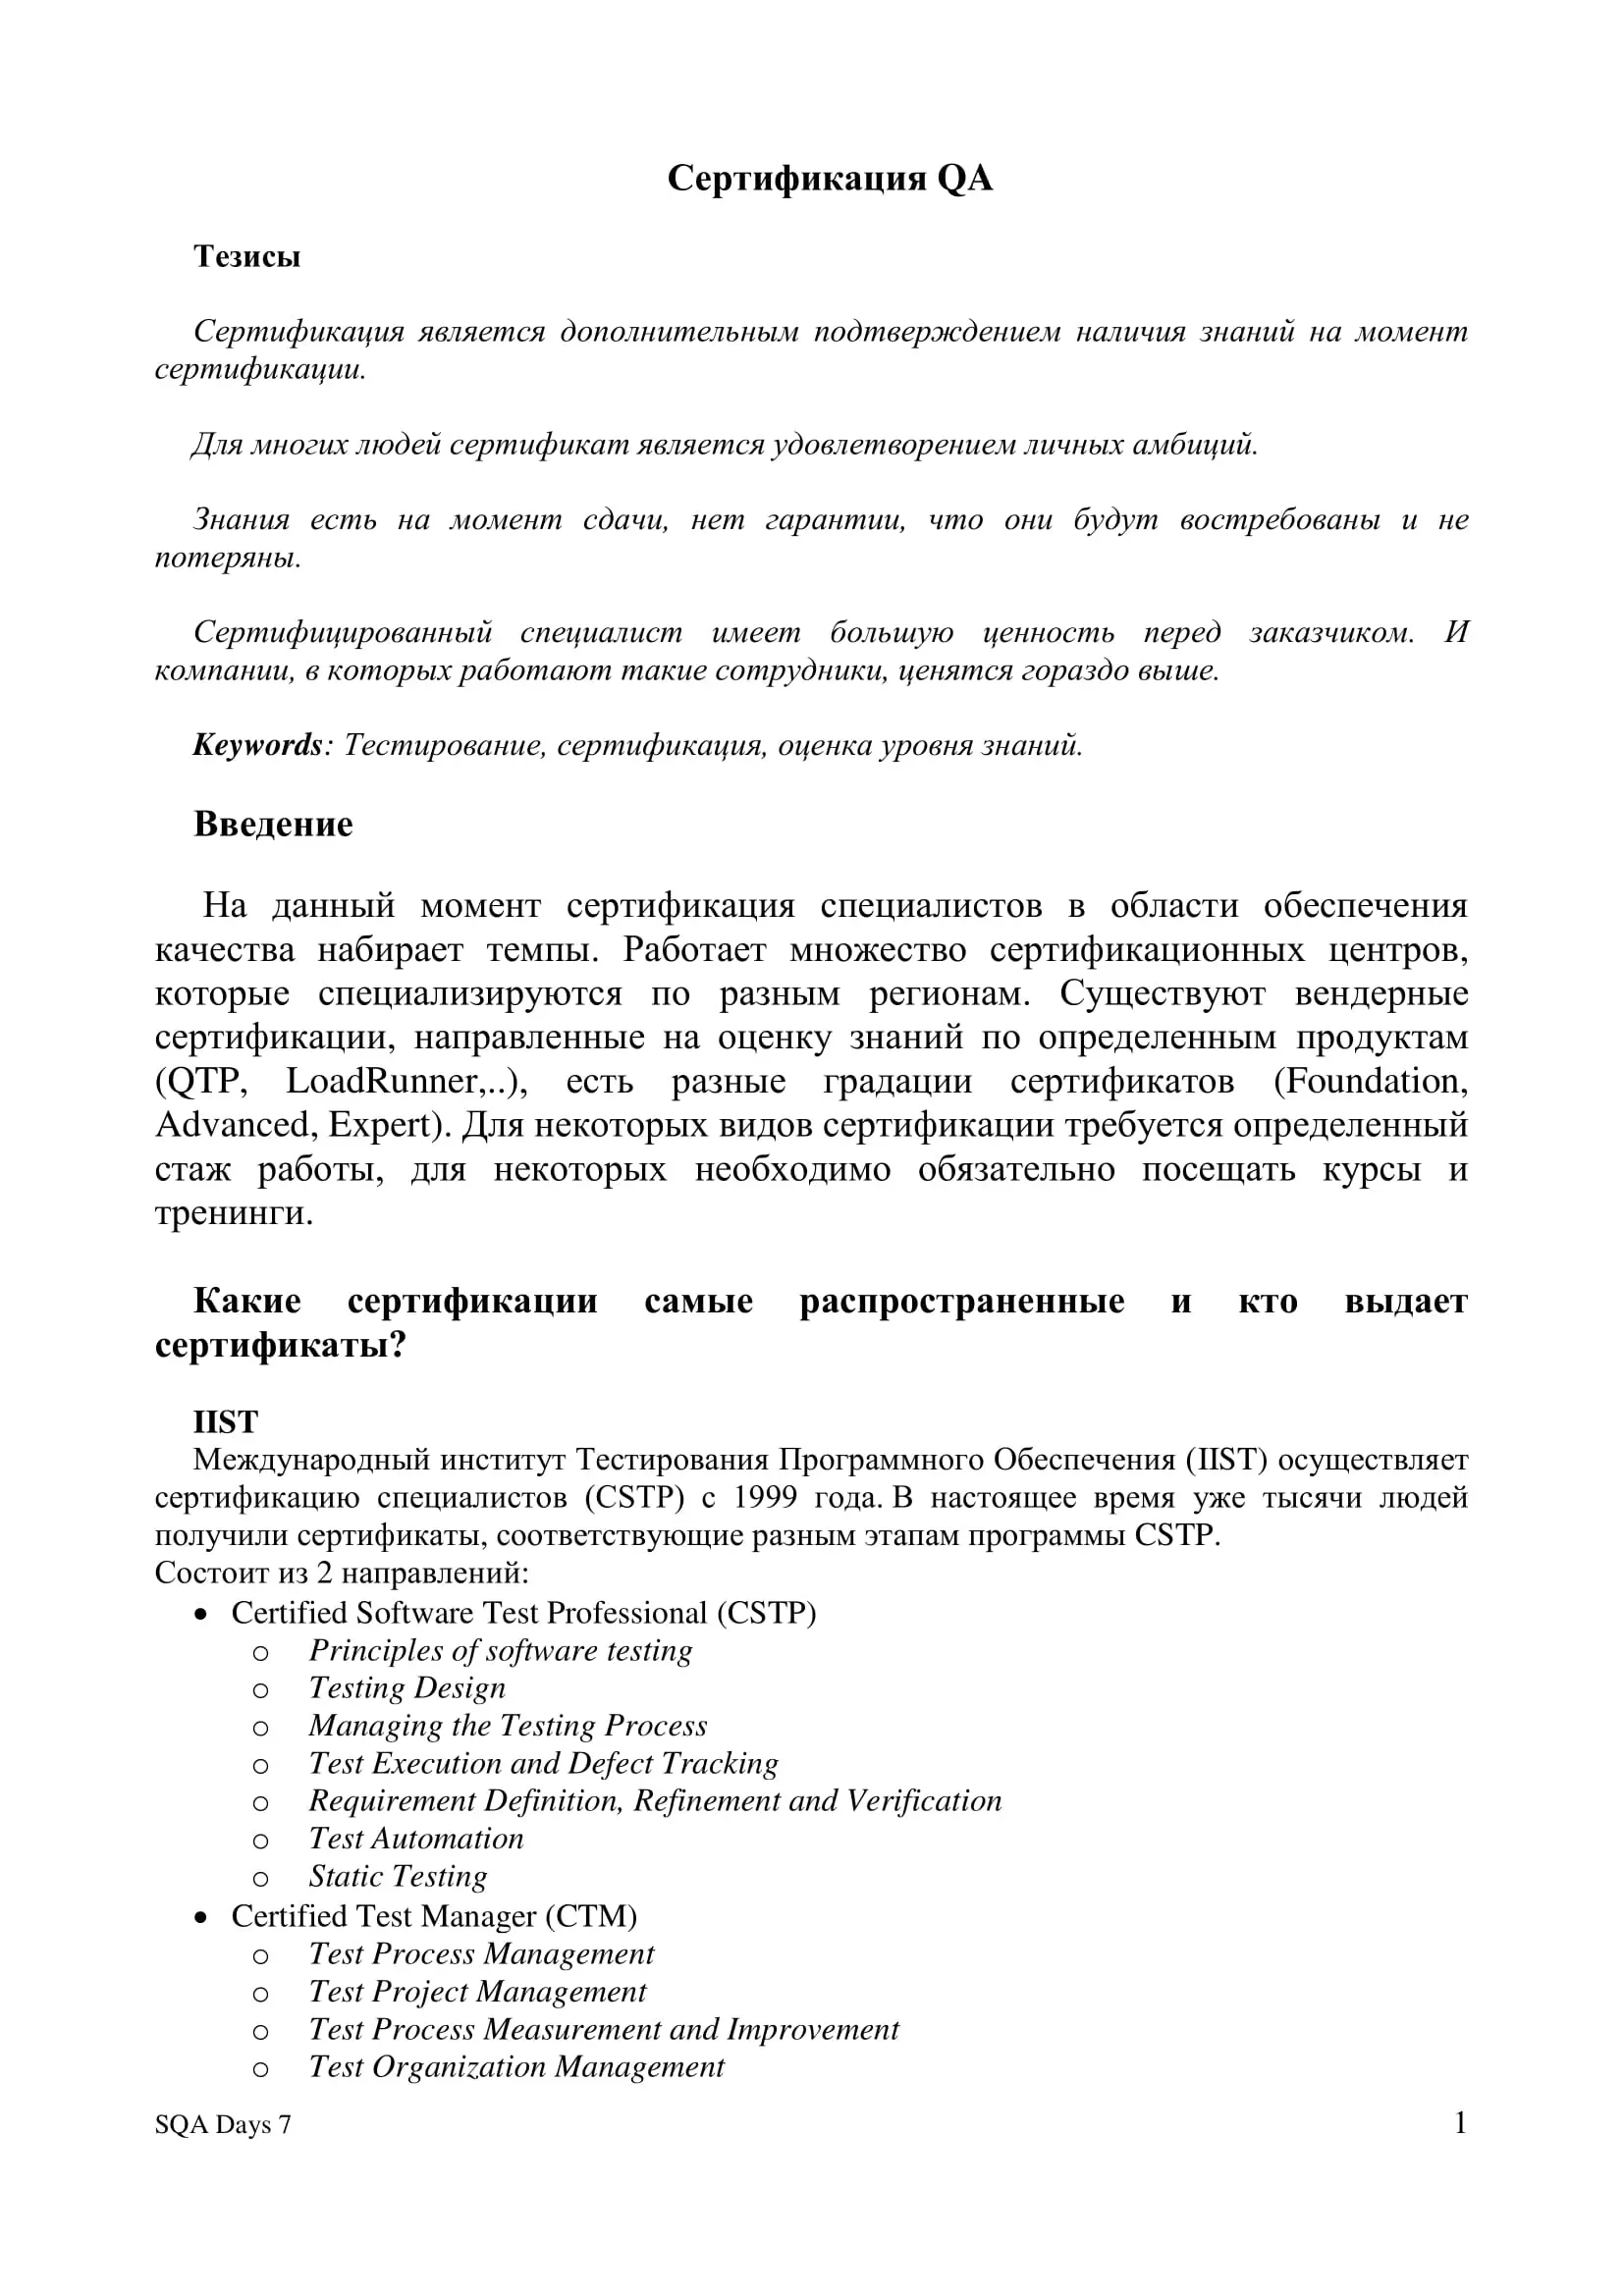 SQAdays_2010_Certification_QA_ru-1